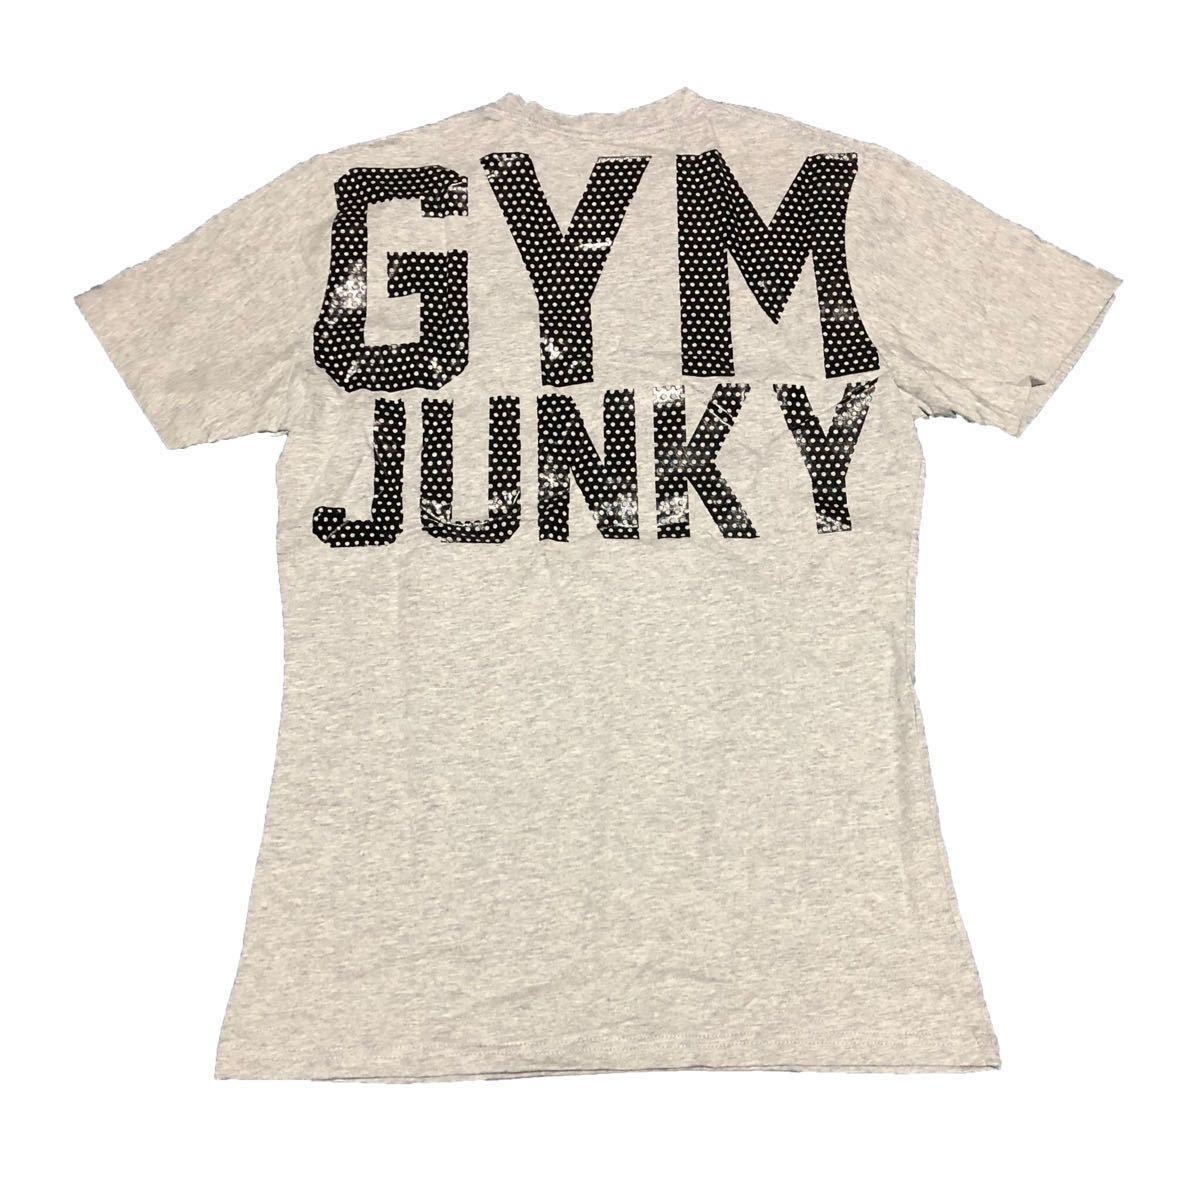 GYMJUNKY トレーニング Tシャツ Bタイプ Lサイズ メンズ 筋トレ マッチョ ストレッチ フィジーク フィットネス ボディービル ワークアウト